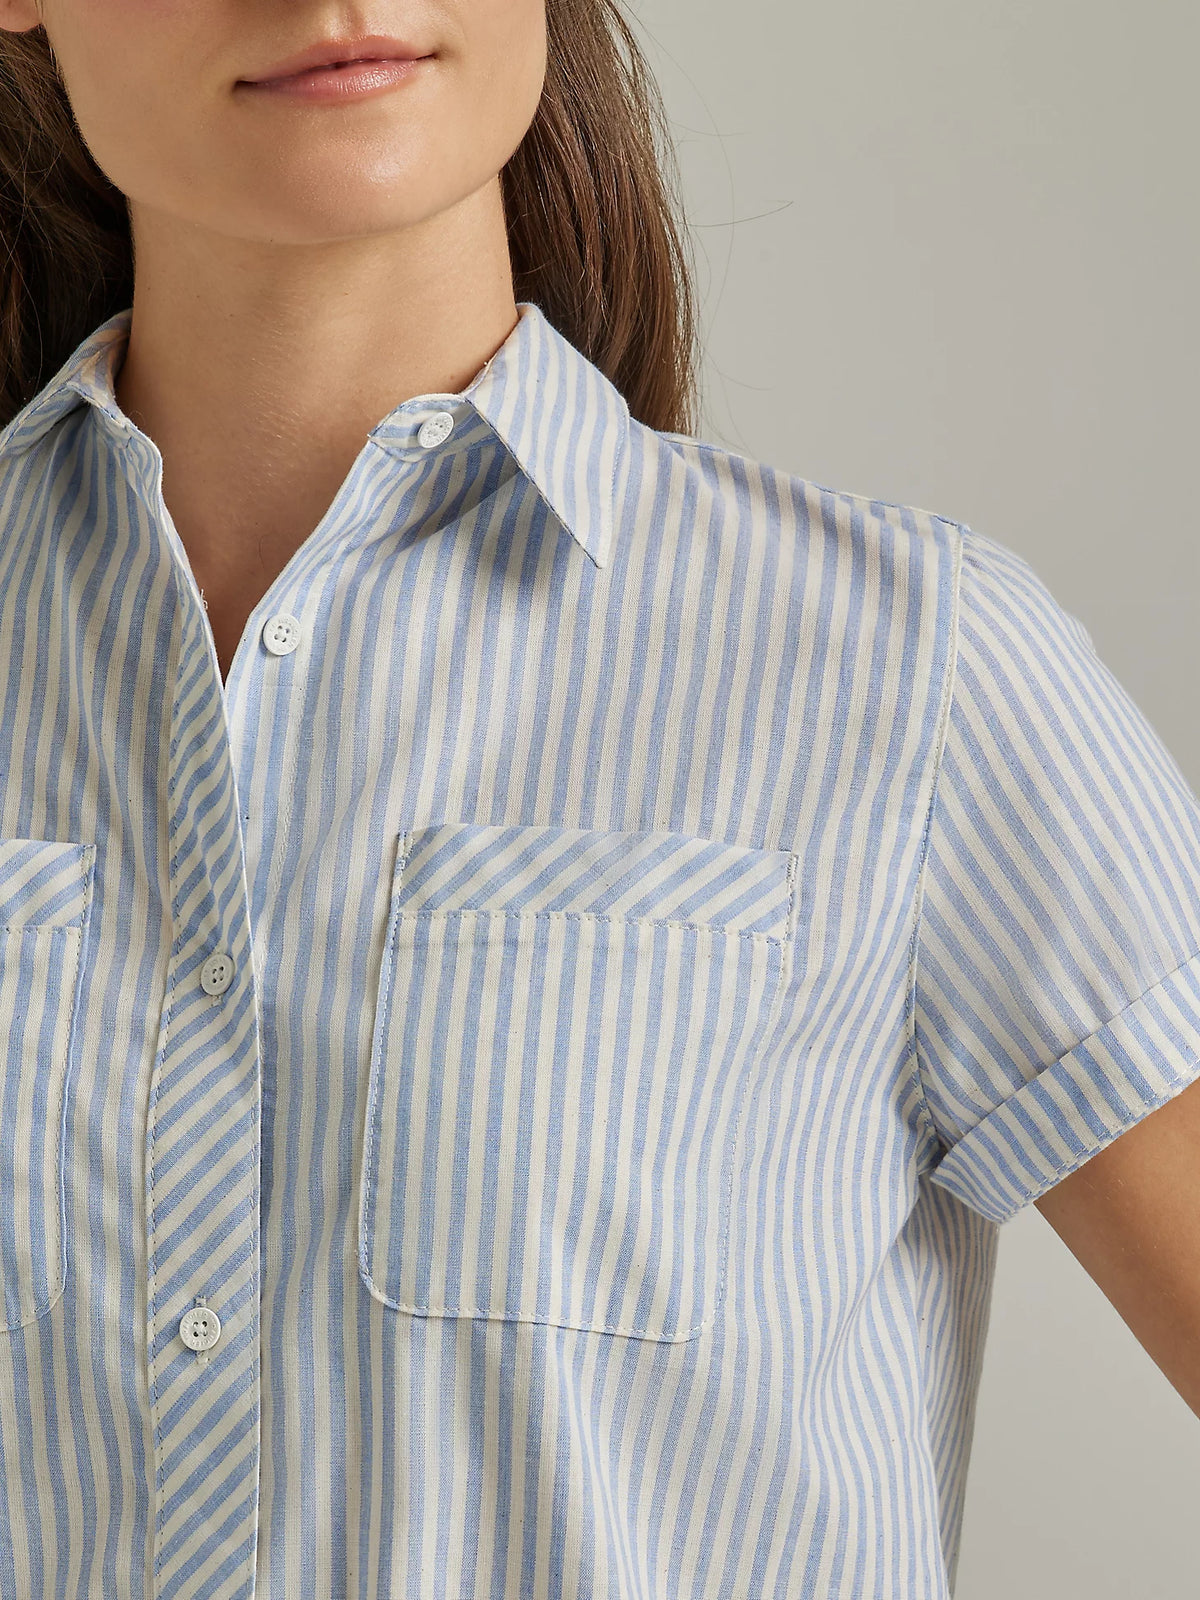 Wrangler ATG Women's Breeze Stripe Short Sleeve Shirt